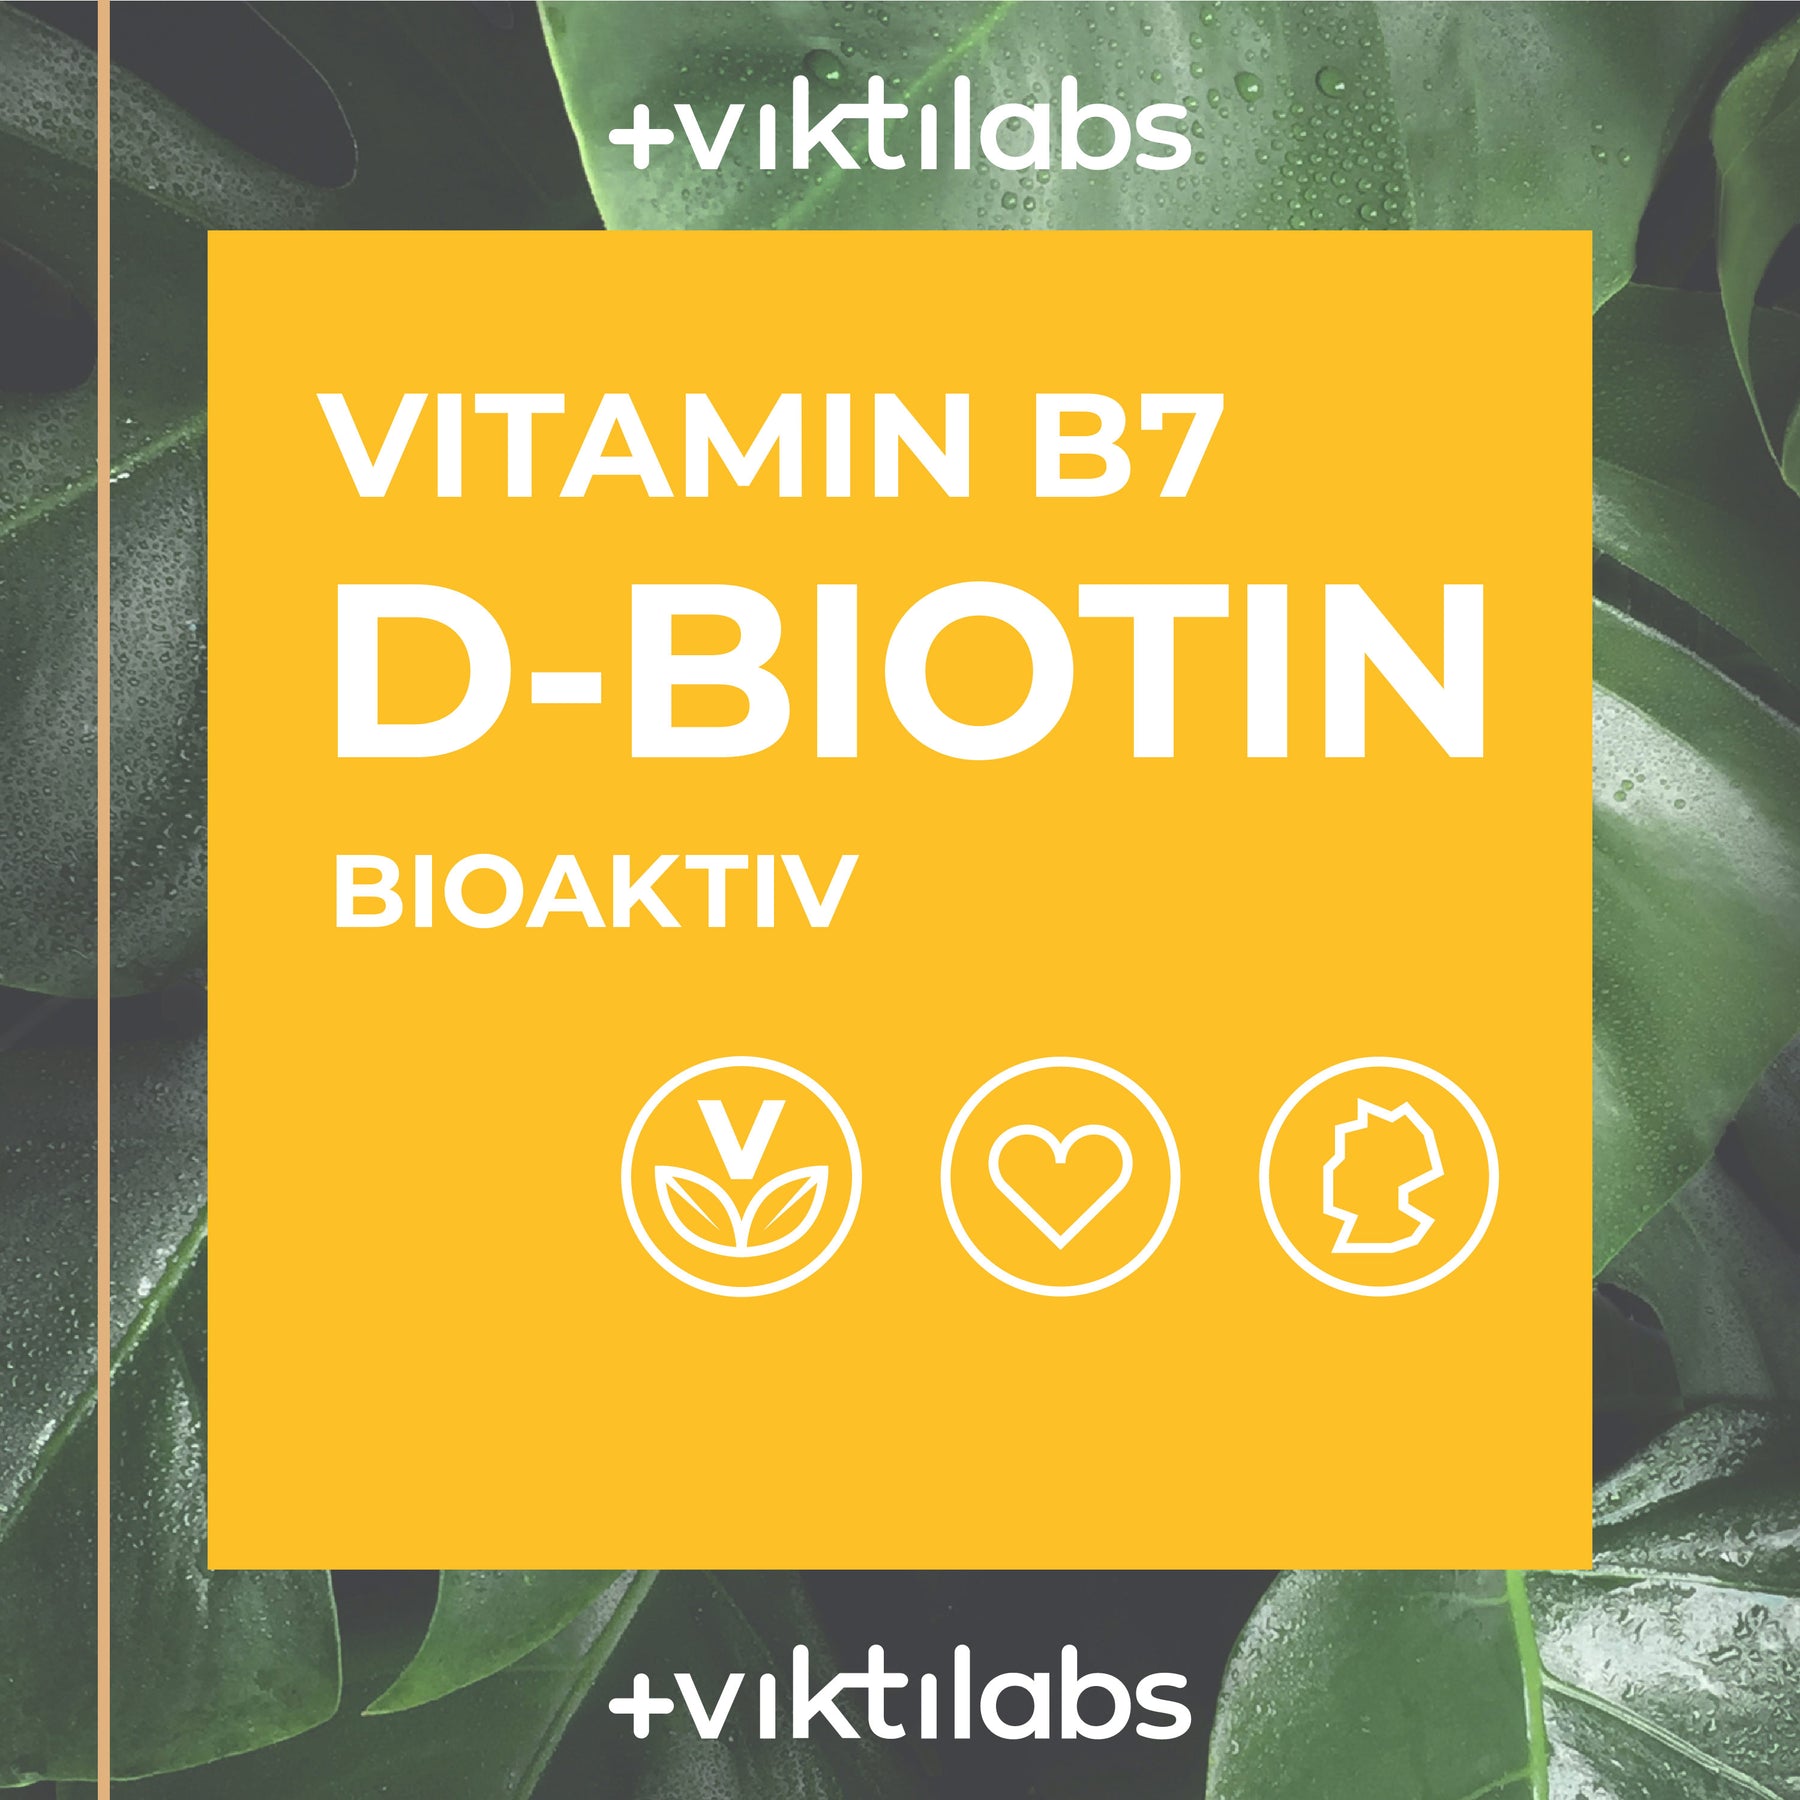 Vitamin B7 - D-Biotin (Bioaktiv) - 60 Kapseln